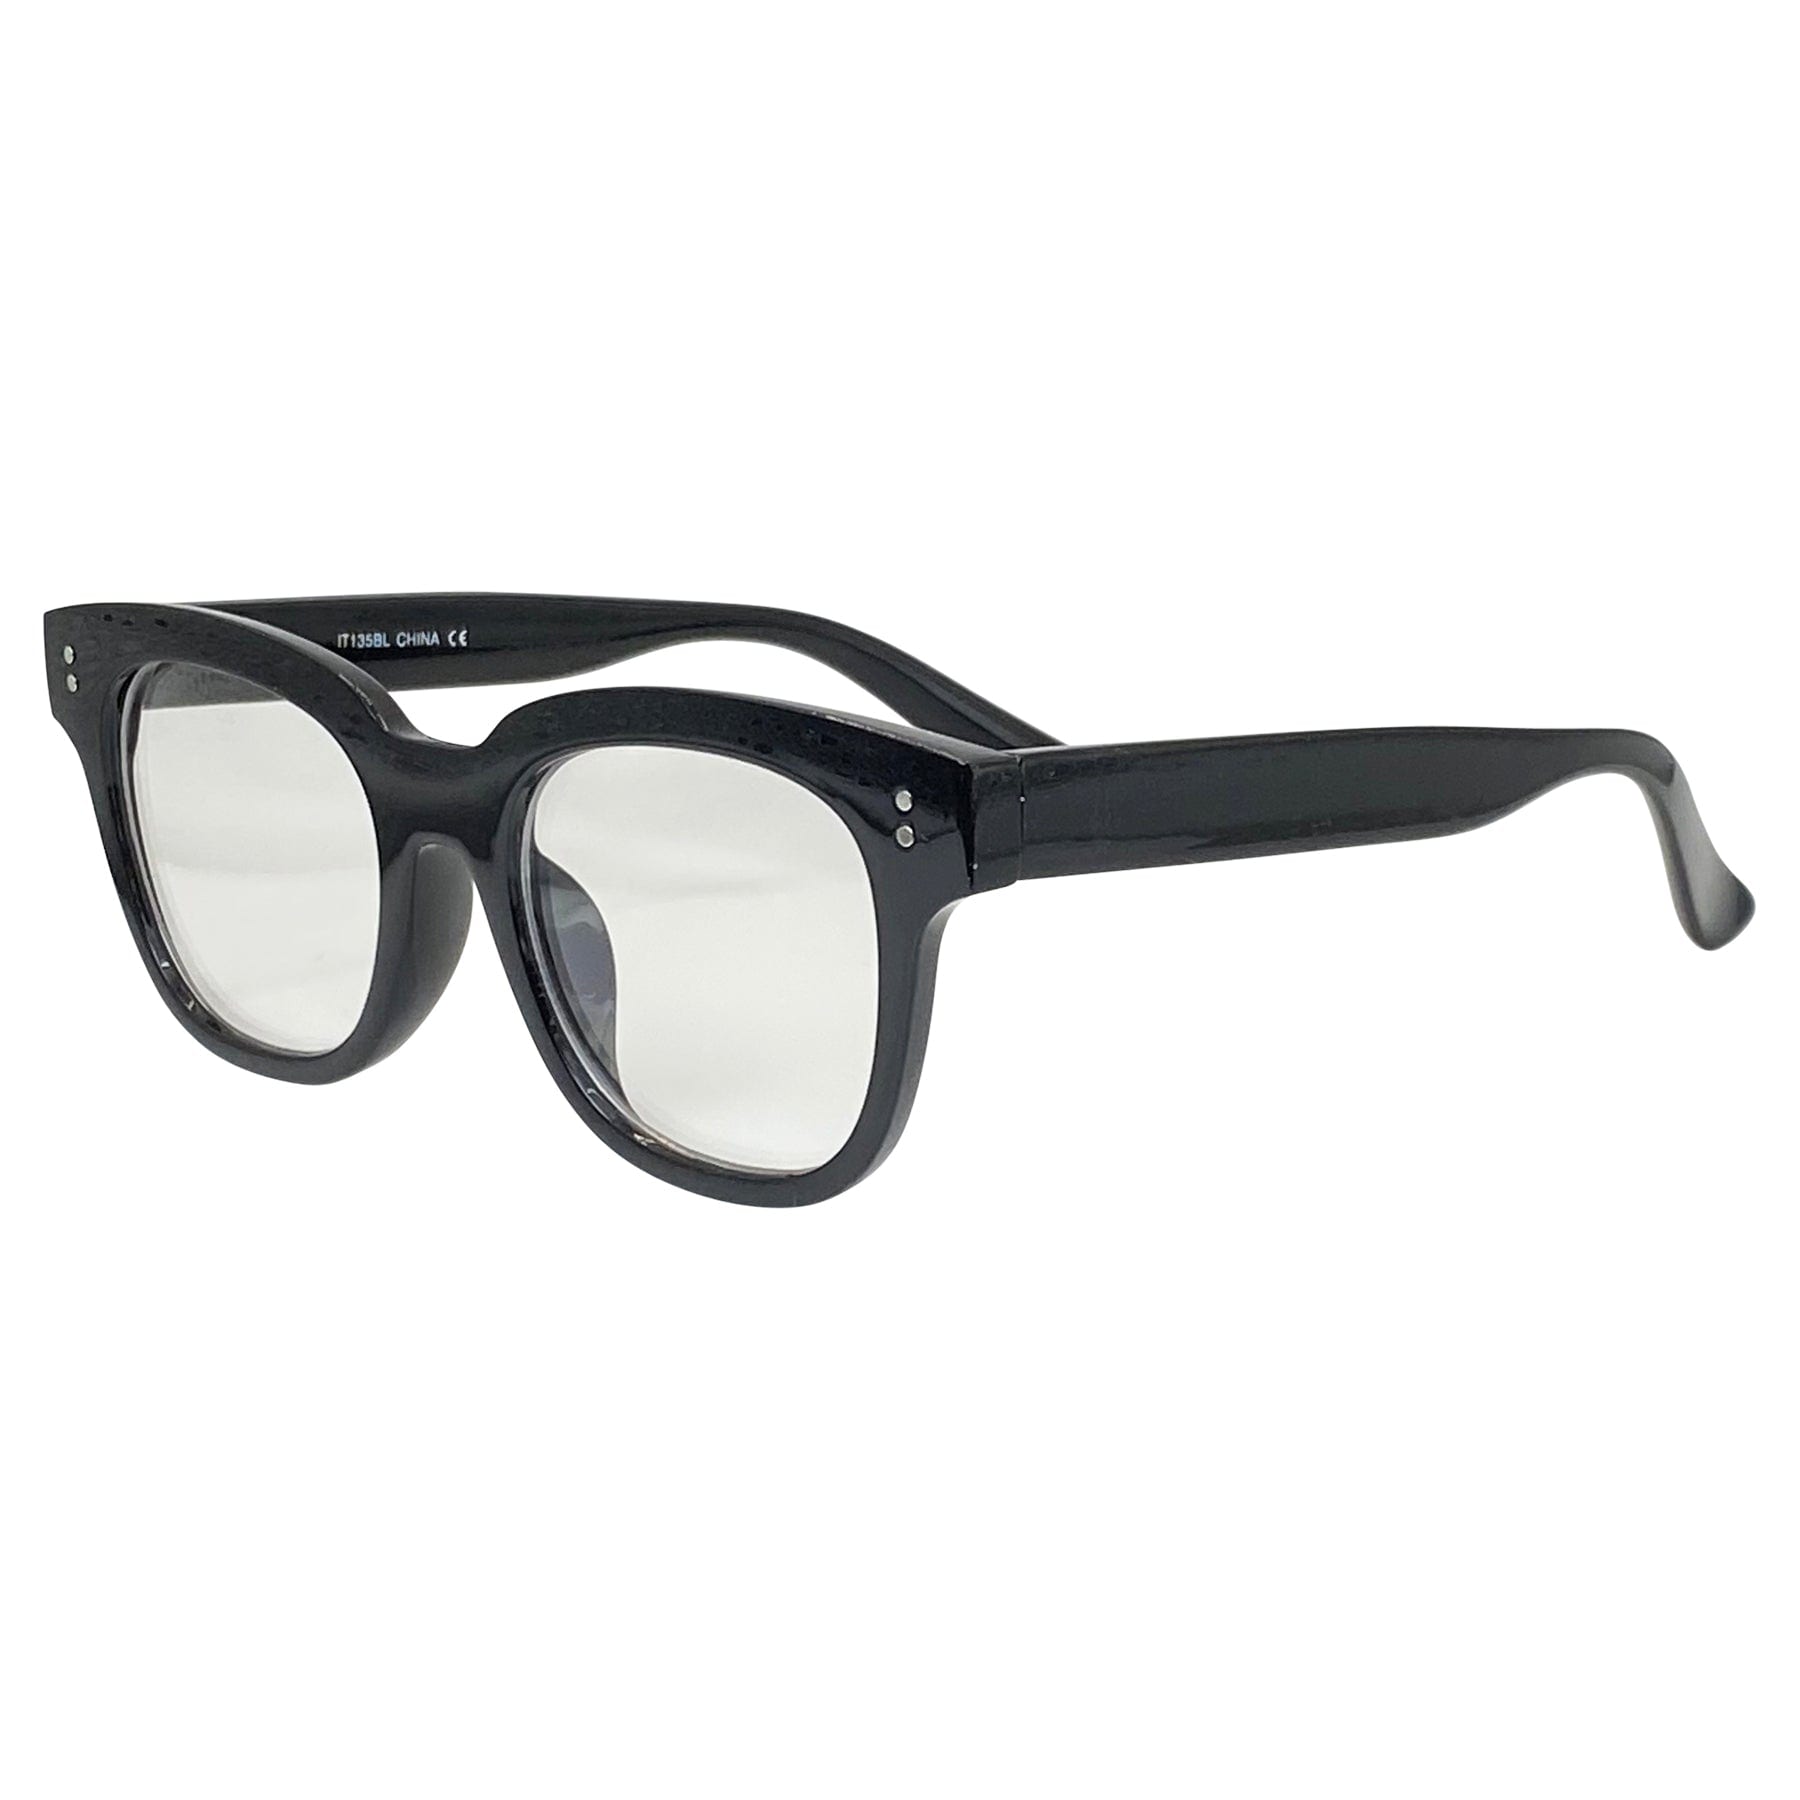 black color glasses with a clear blueblocker lens 